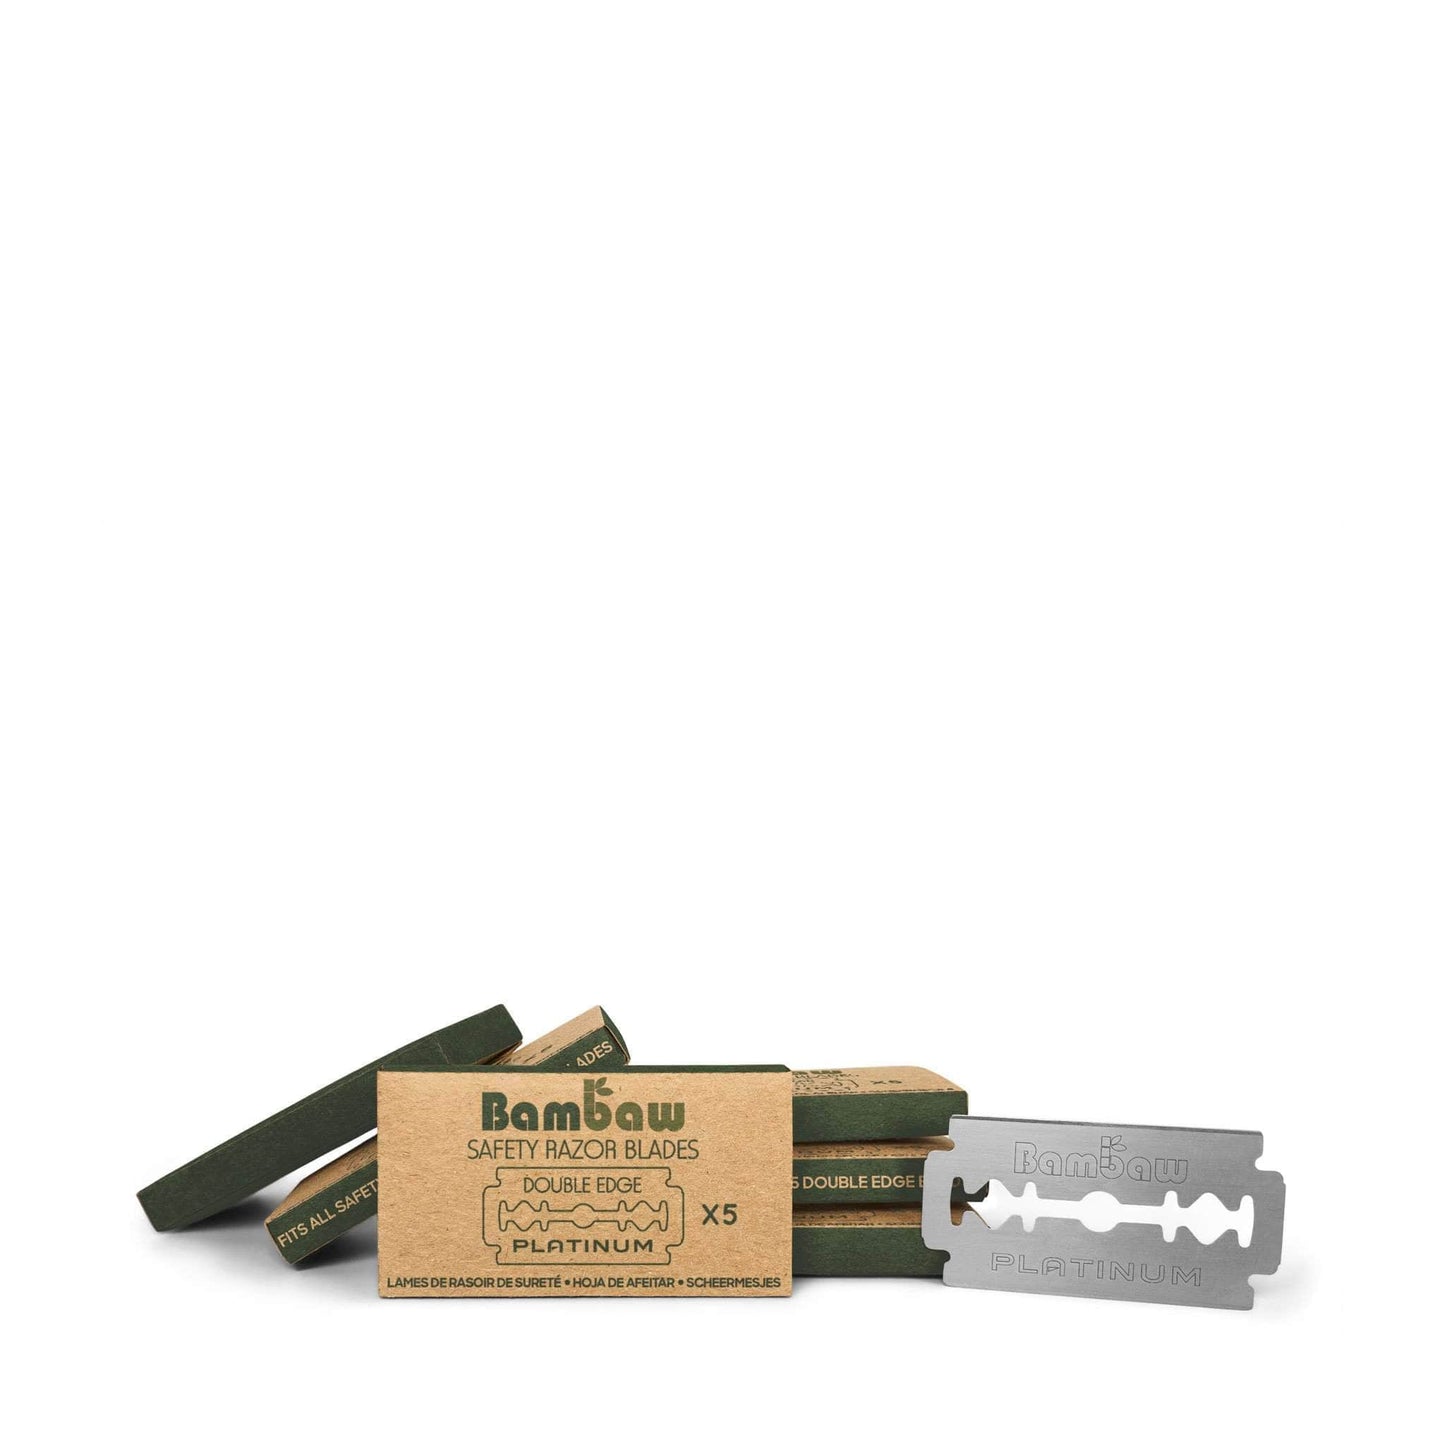 Bambaw Shaving Accessories Safety Razor Shaving Blades - 5 Pack - Bambaw